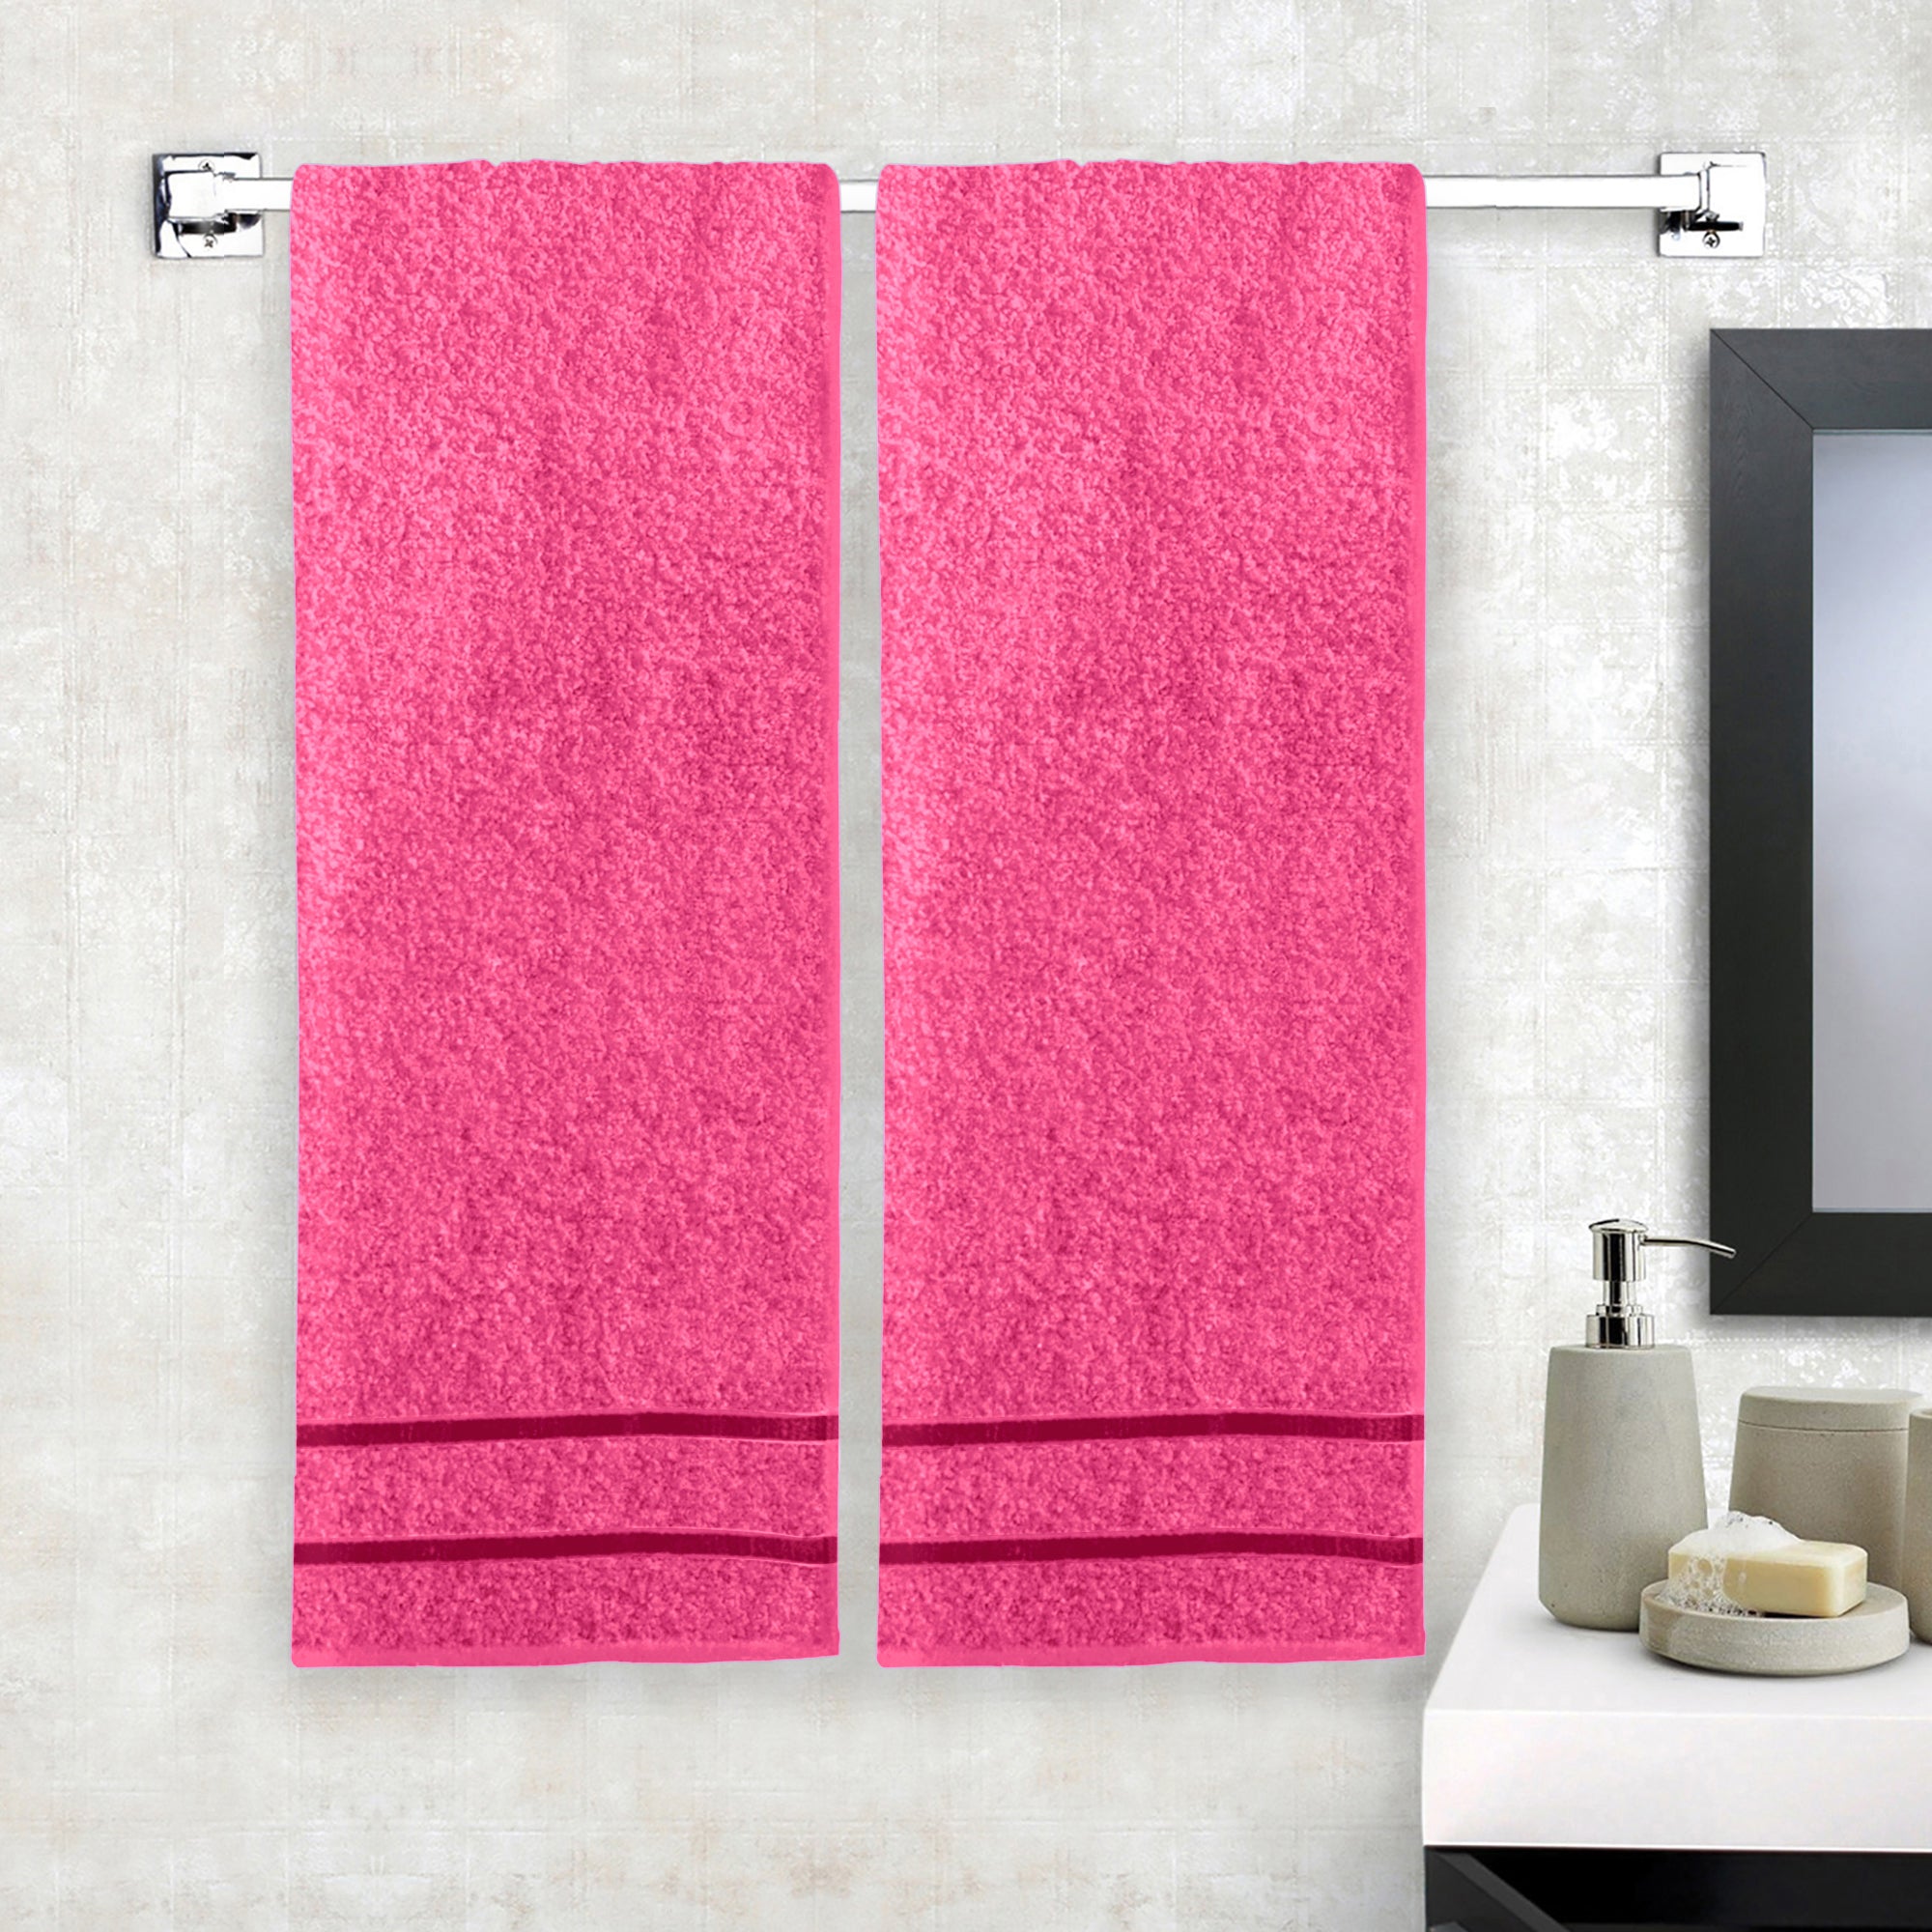 Story@Home 2 Units 100% Cotton Bath Towels - Pink